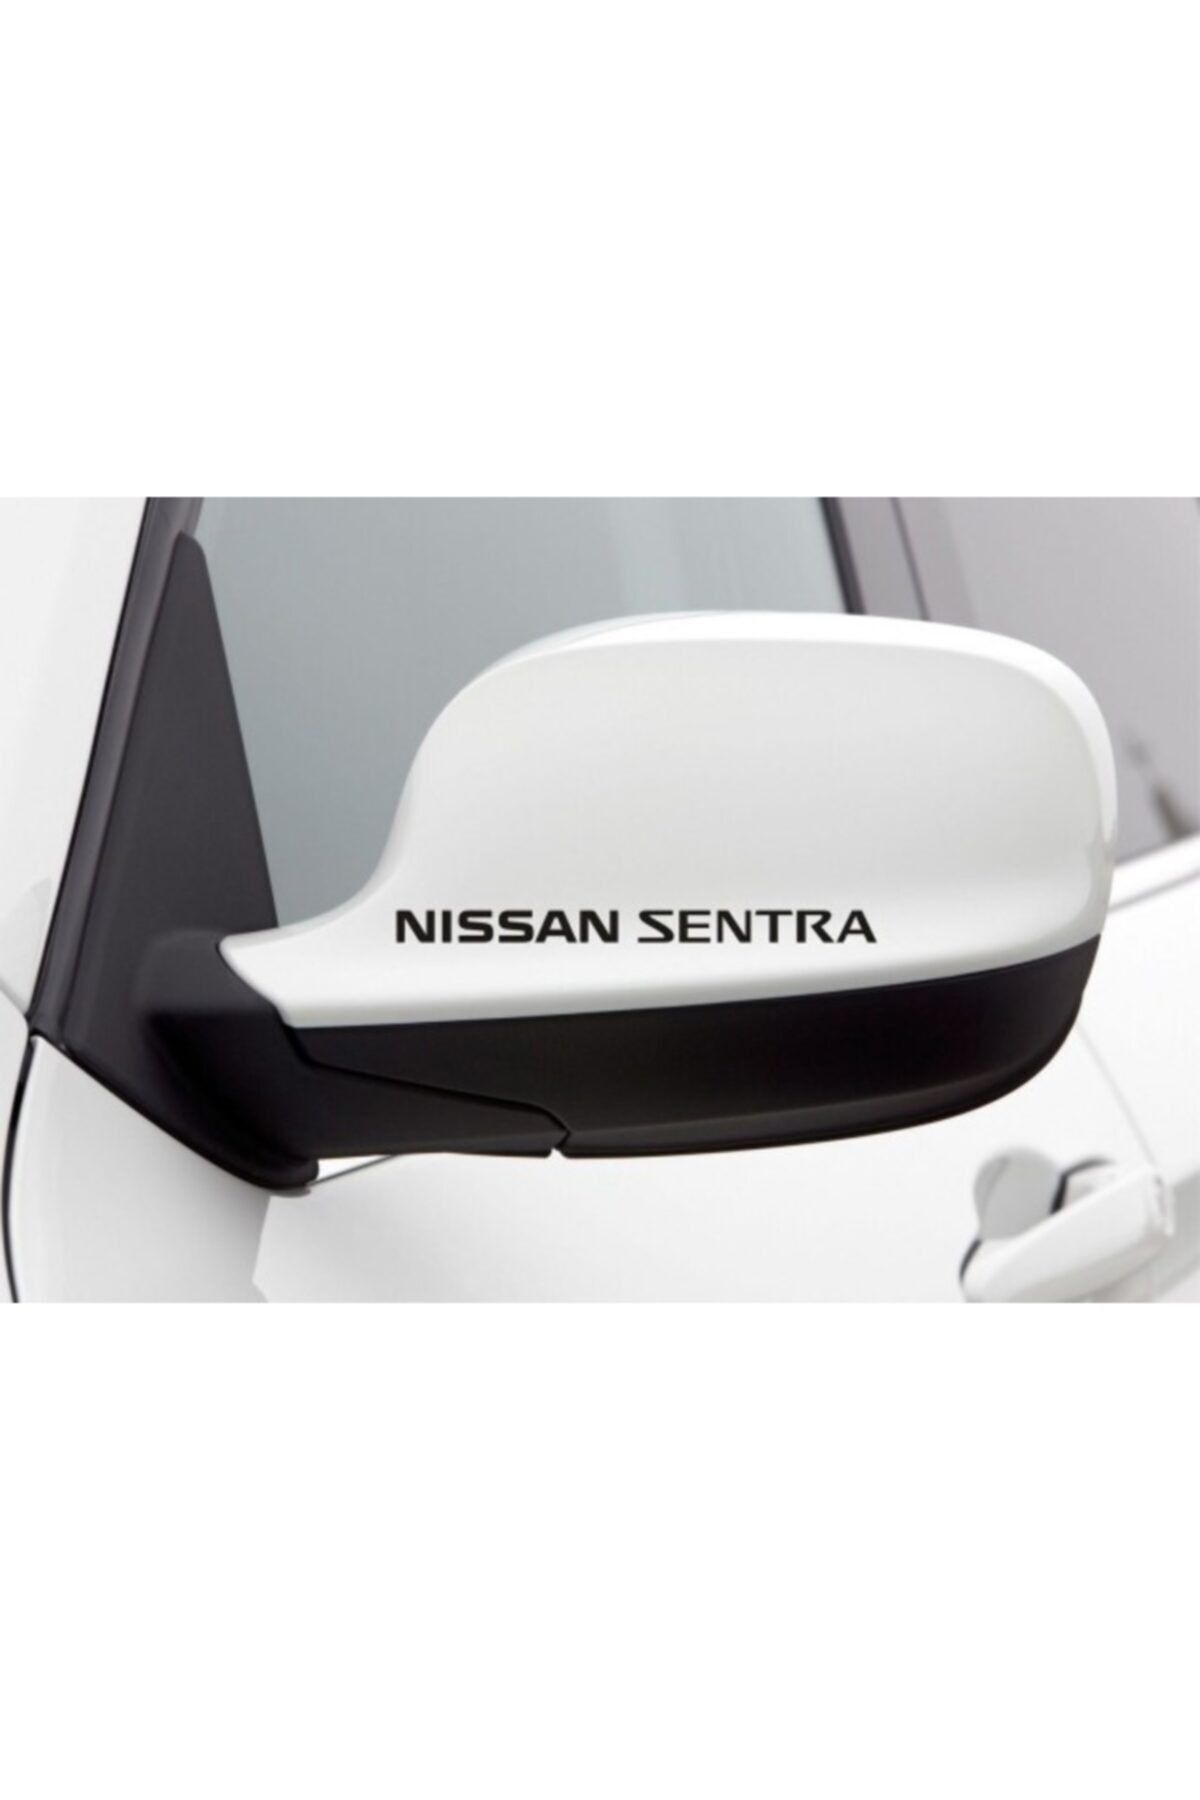 TSC Nissan SENTRA Araba Yan Ayna Araç Sticker Yapıştırma 2Adet